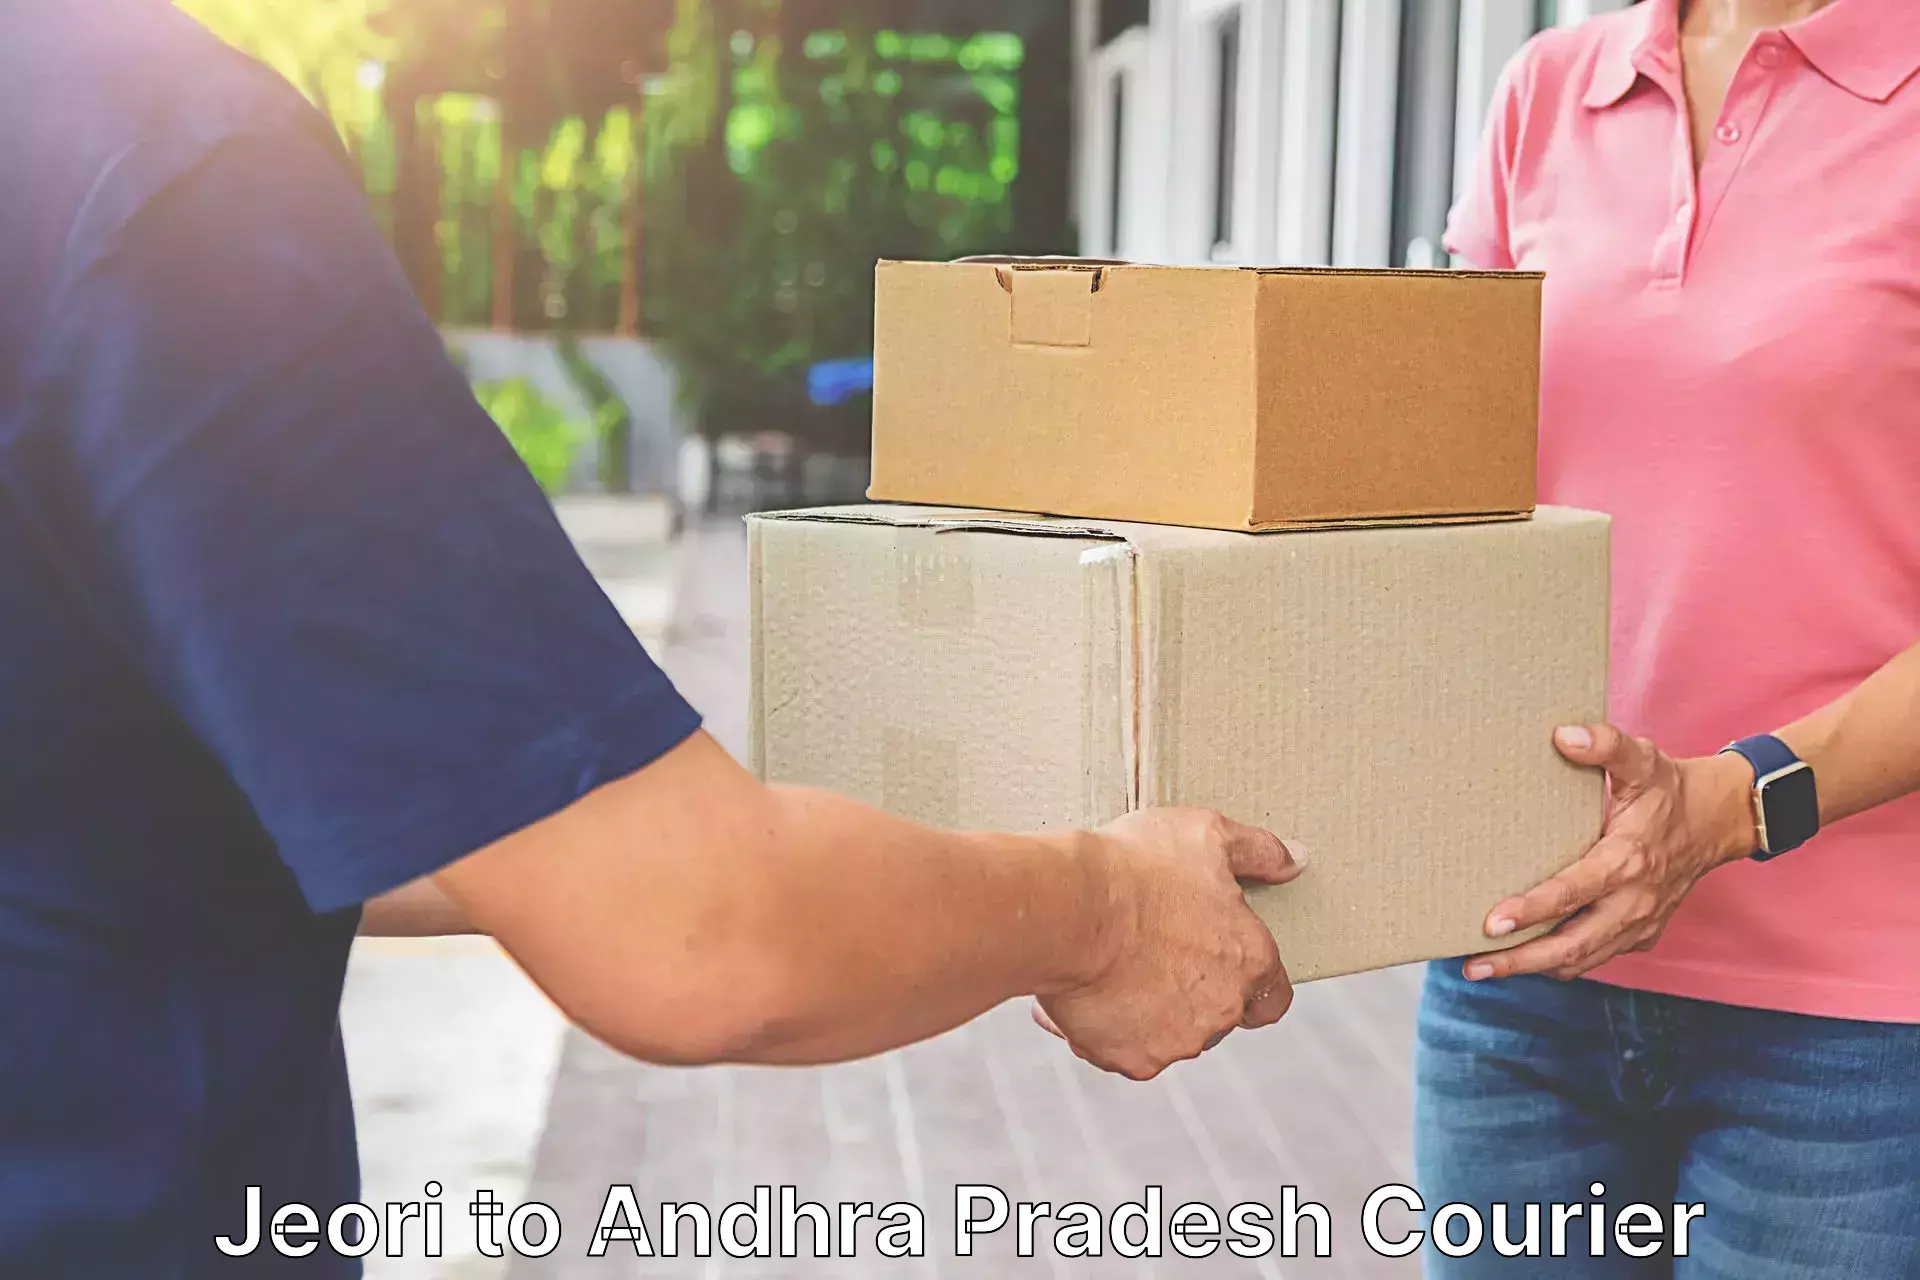 Global courier networks Jeori to Andhra Pradesh